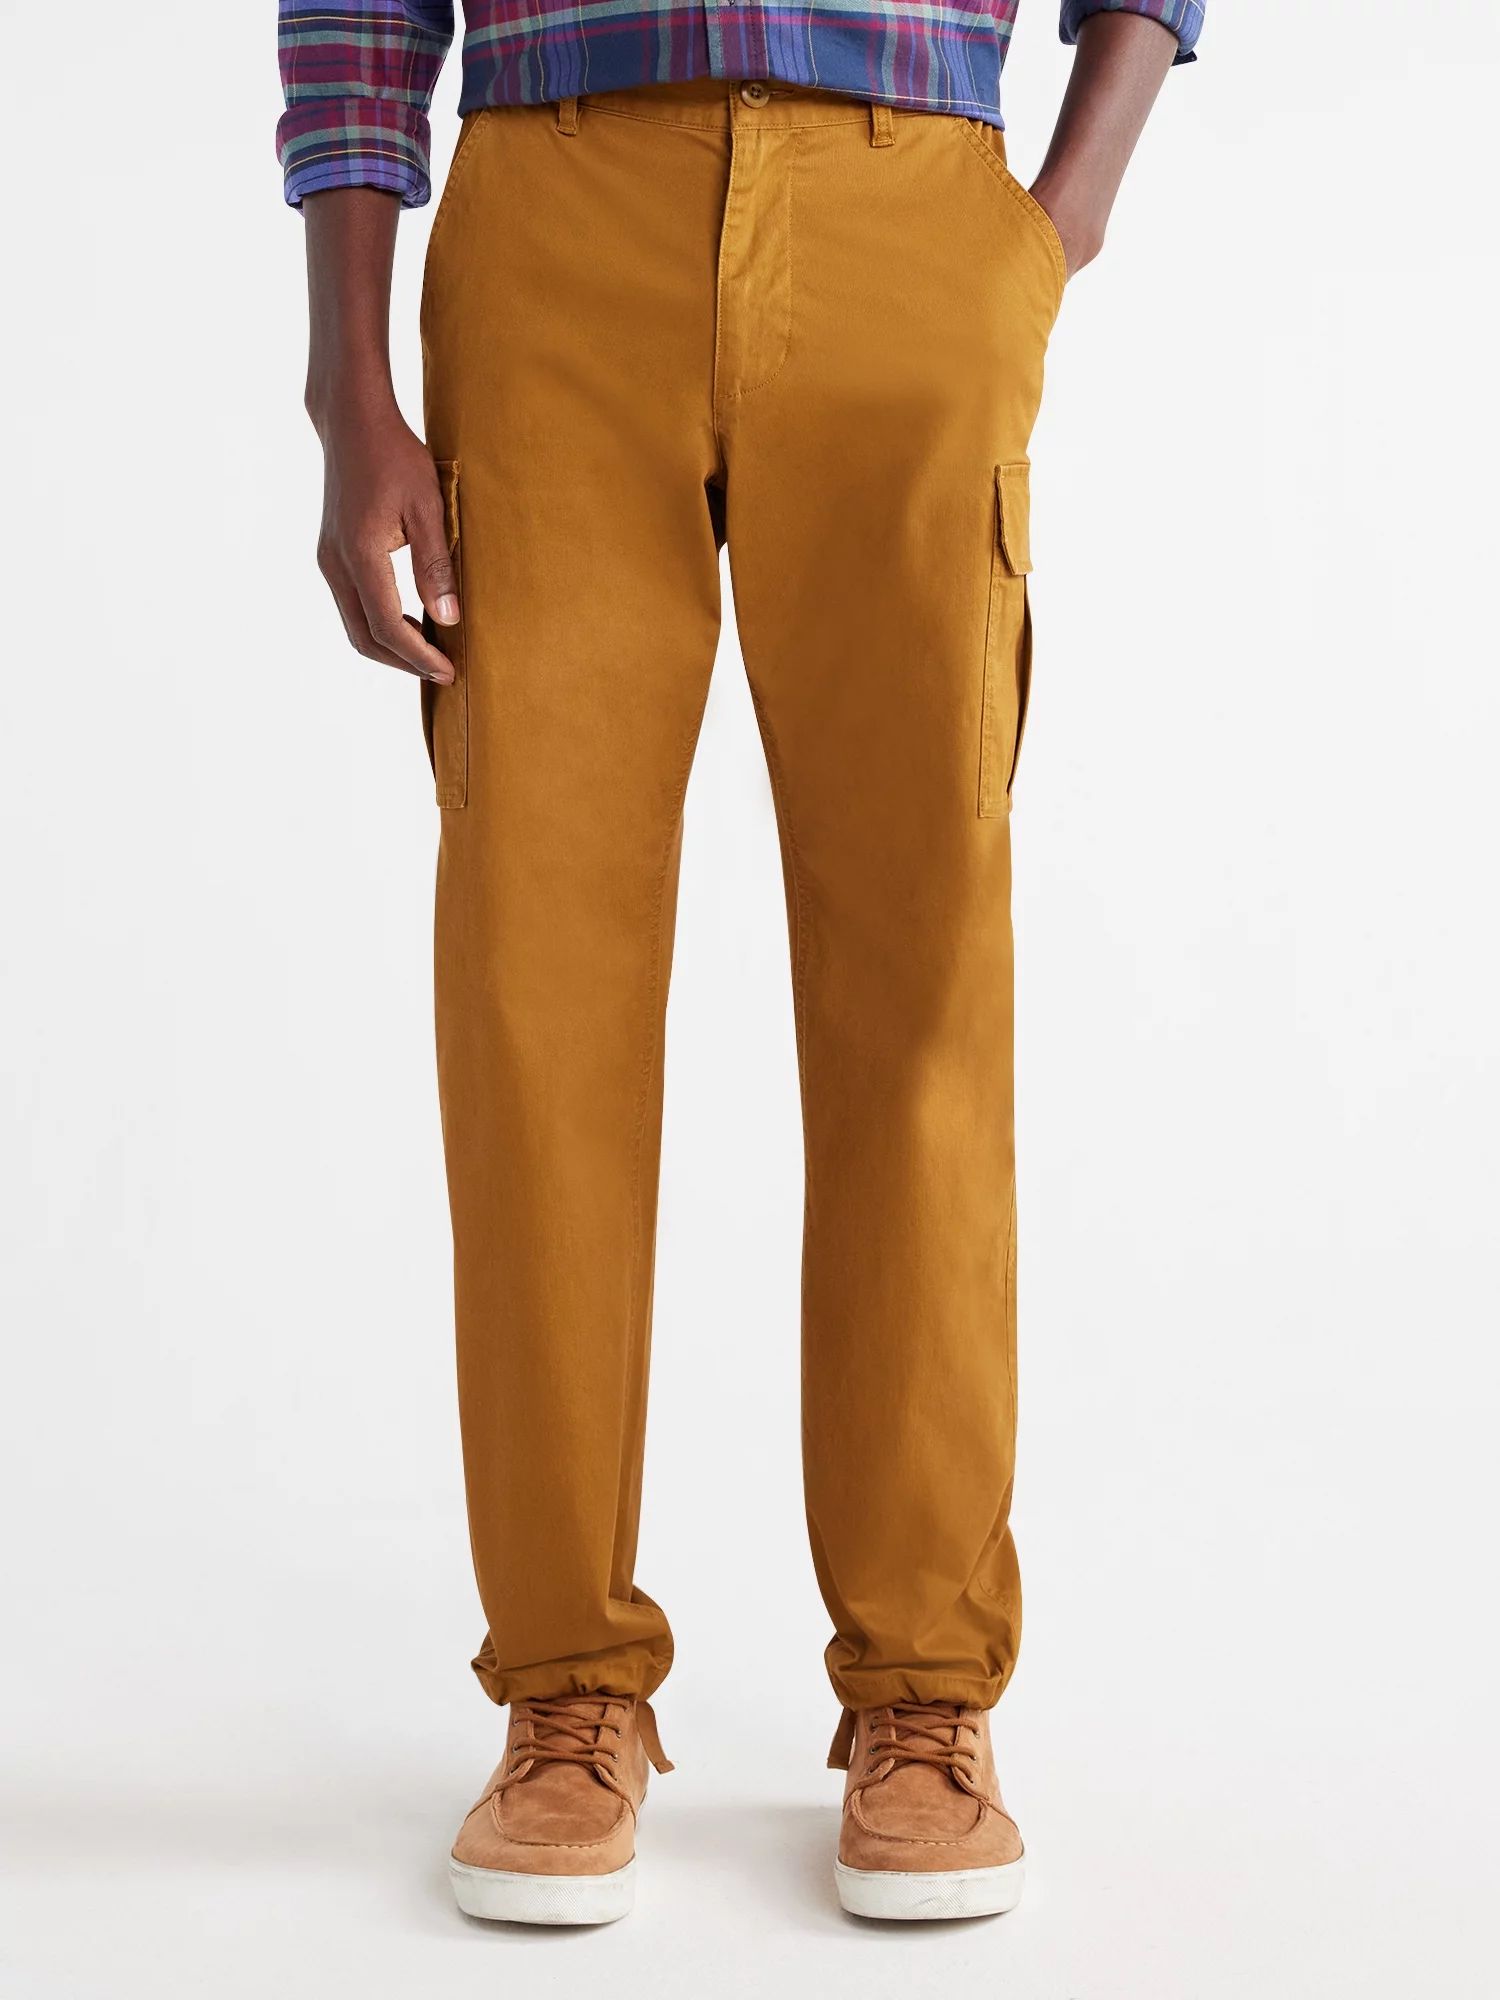 Free Assembly Men's Cargo Pants with Drawstring Hem, 31" Inseam, Sizes XS-3XL | Walmart (US)